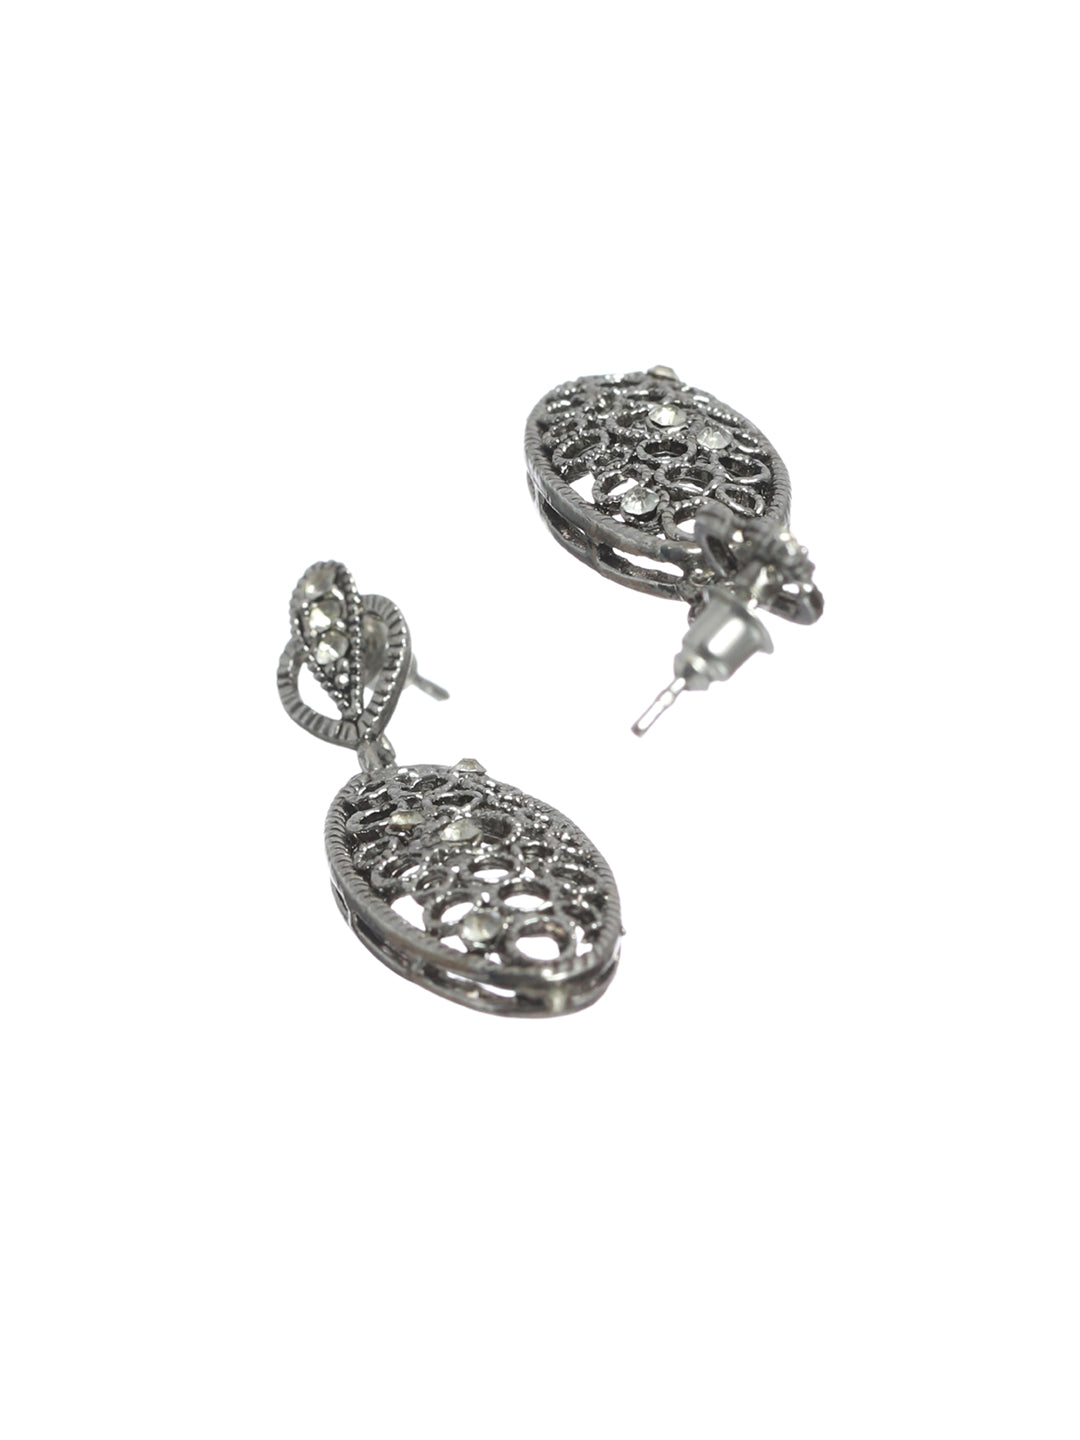 Studded Embossed Oxidised Silver Earring Set - NOZ2TOZ